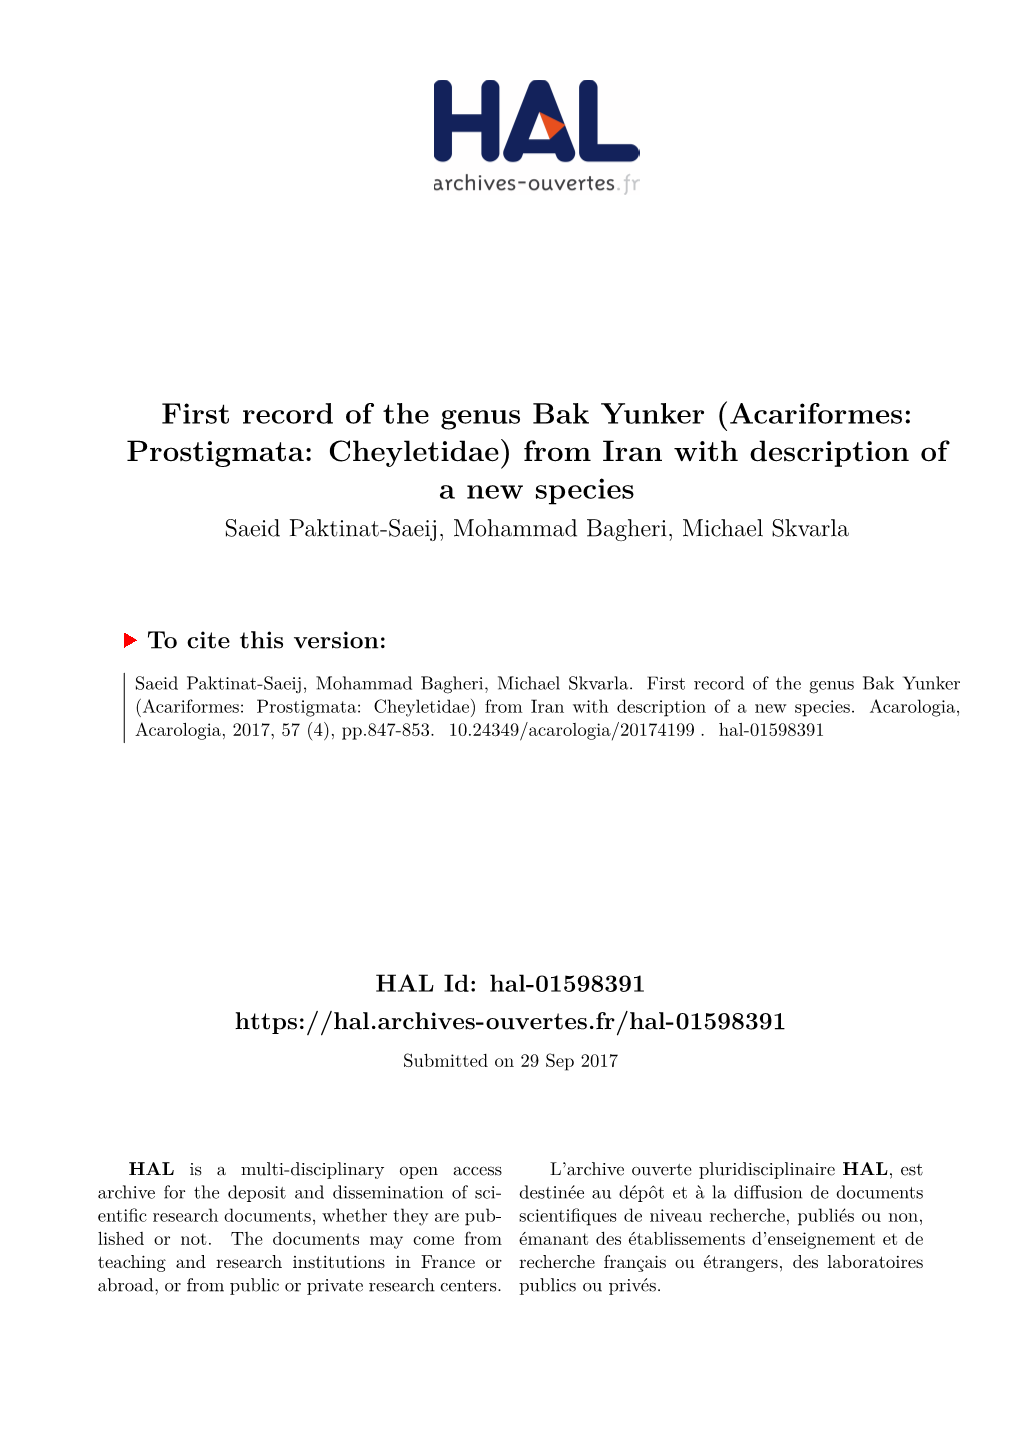 First Record of the Genus Bak Yunker (Acariformes: Prostigmata